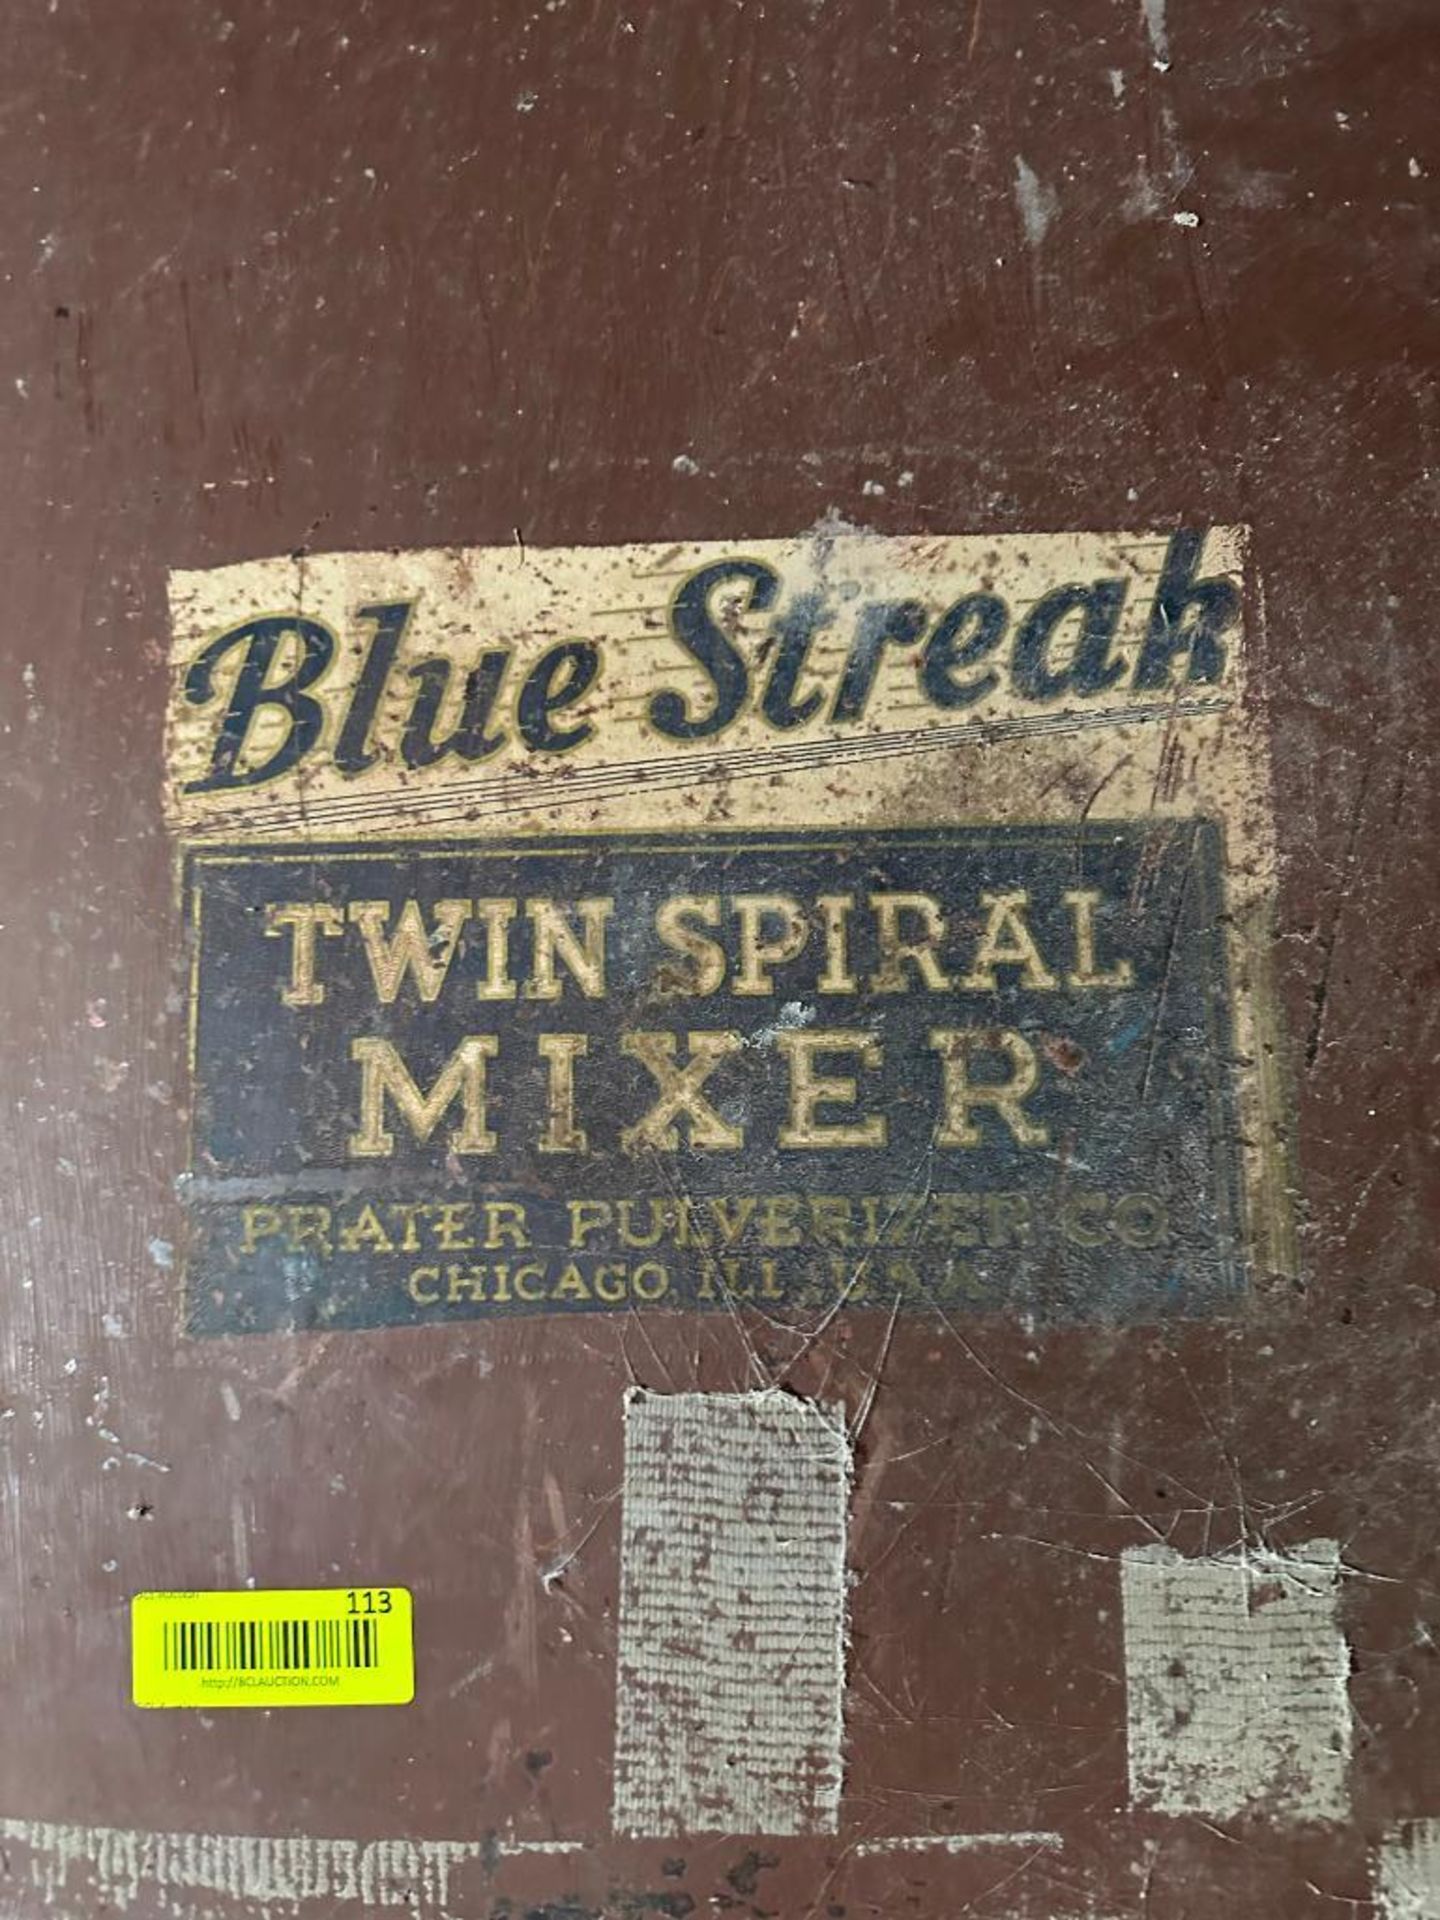 BLUE STREAK TWIN SPIRAL MIXER PRAER PULVERIZER BRAND/MODEL: THE BLUE STREAK SIZE: 48" X 54" X 120" L - Image 5 of 15